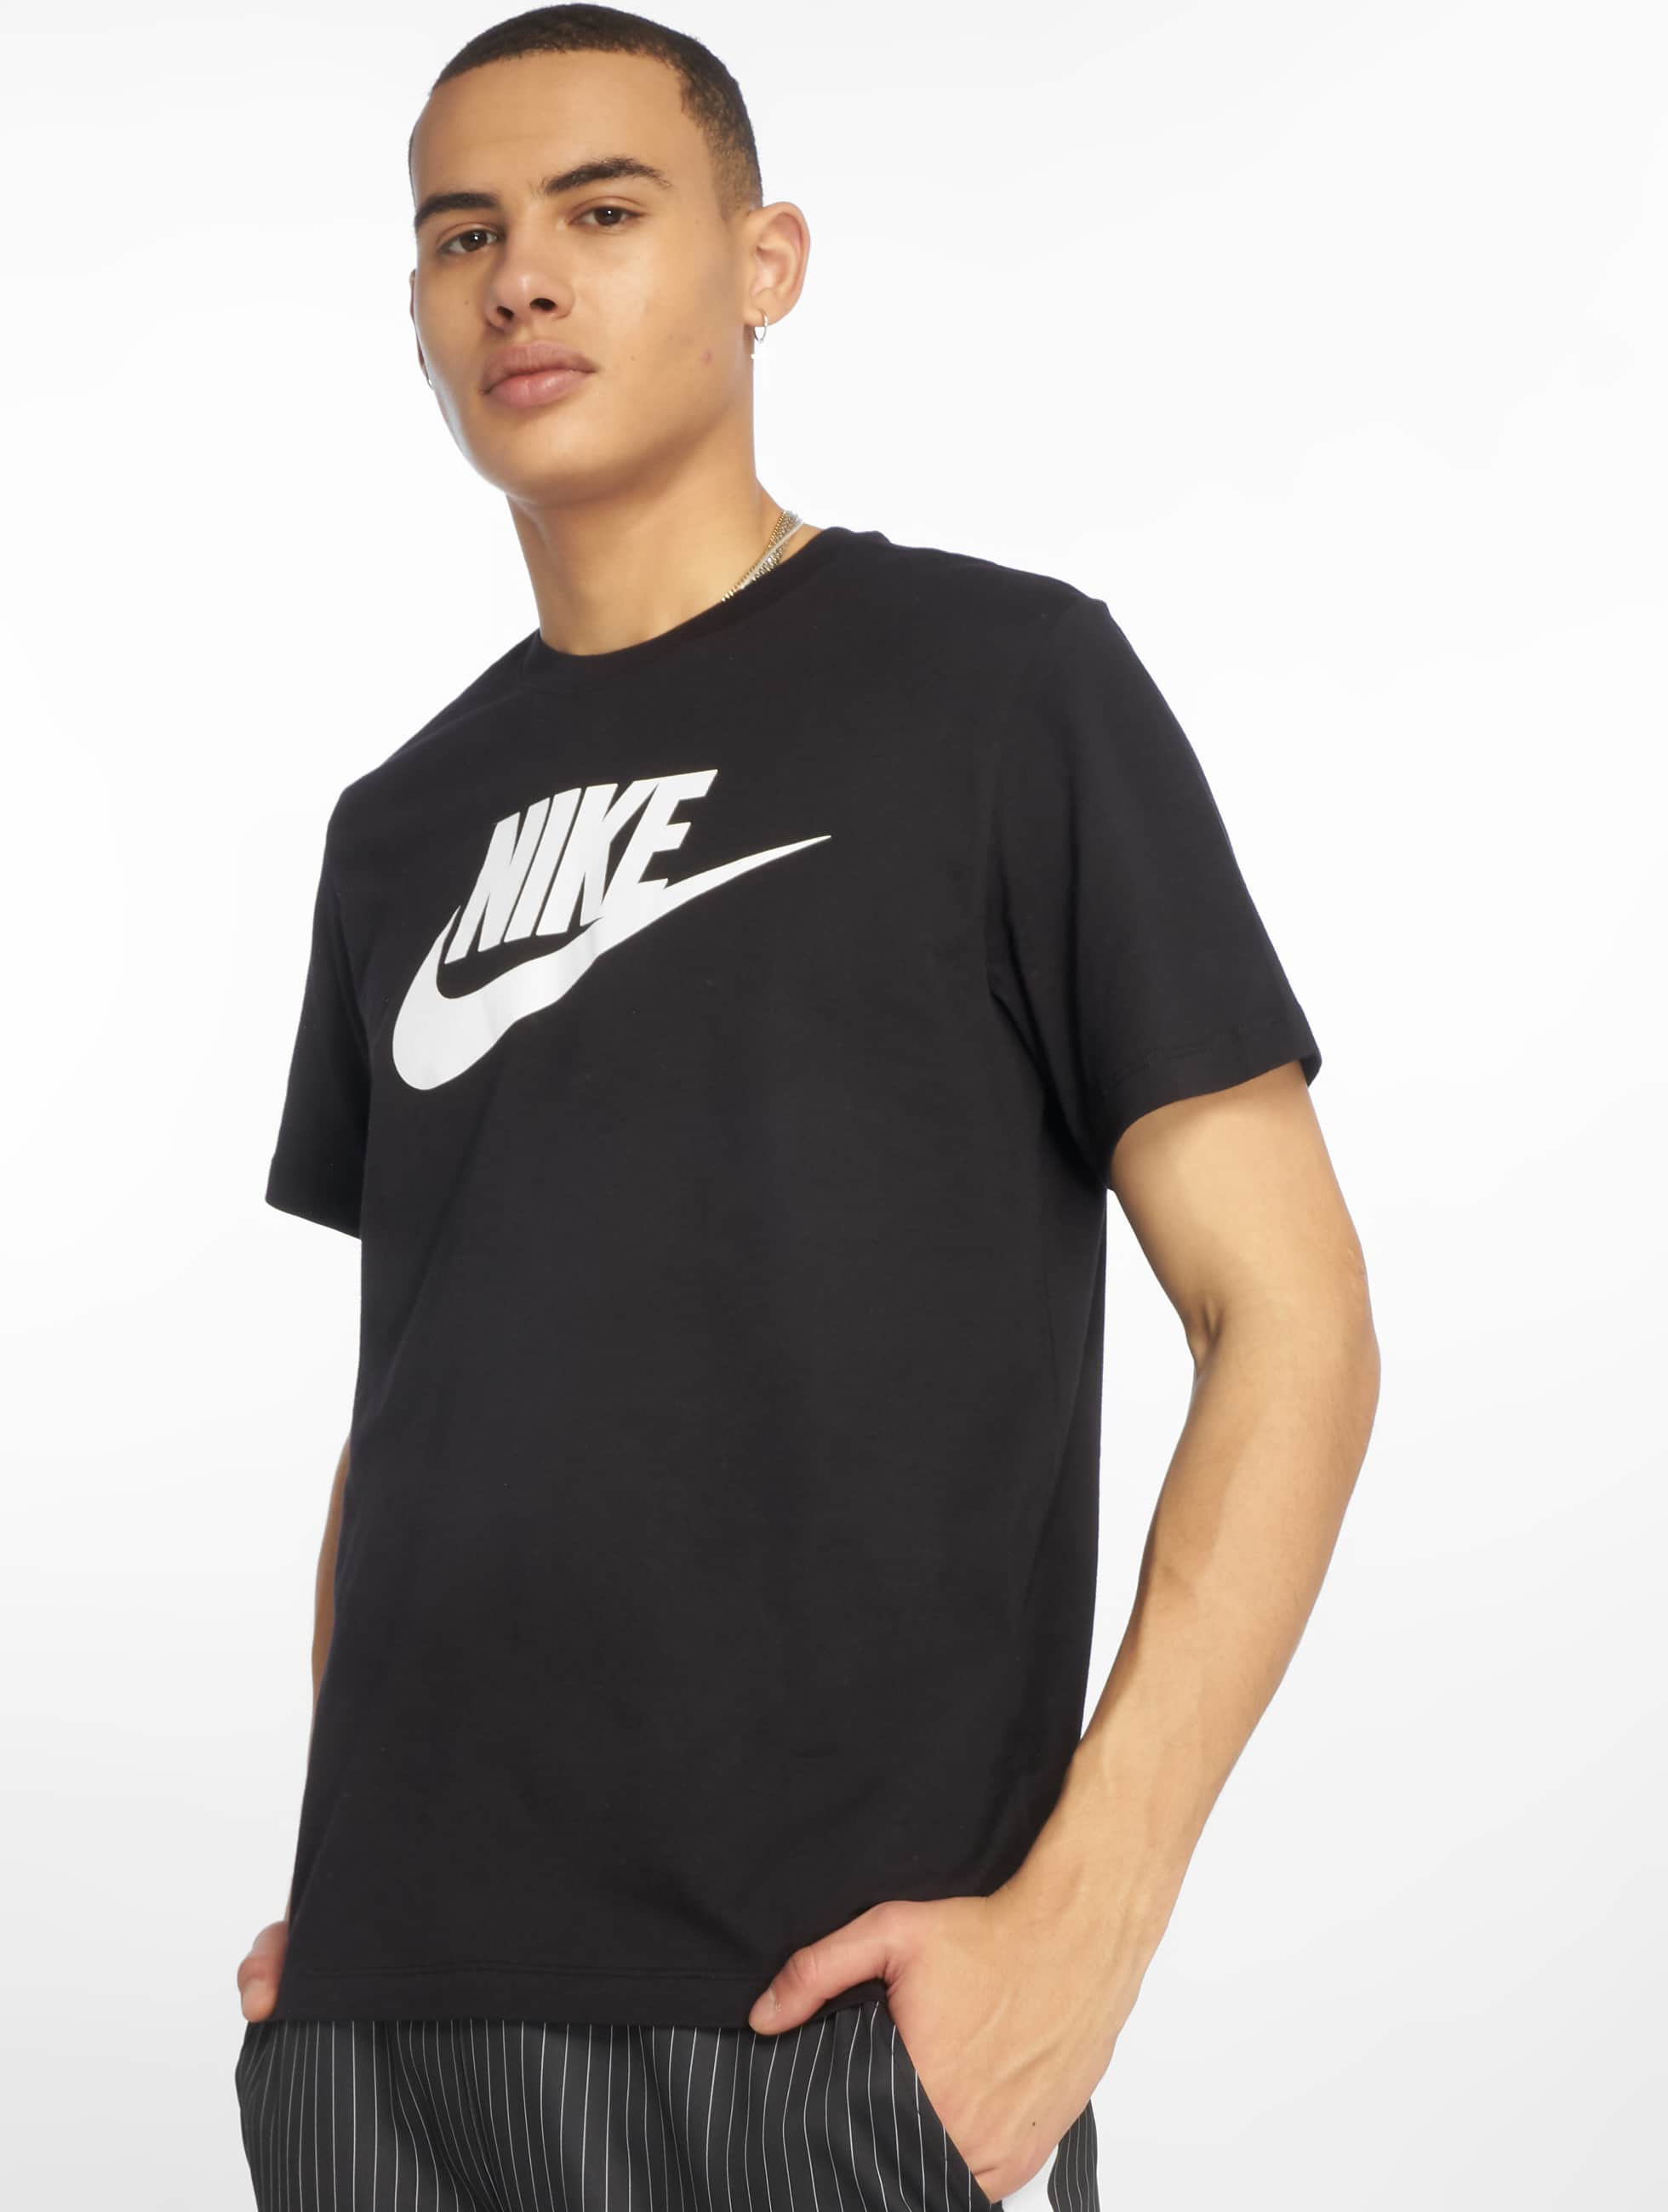 locutor Contar Biblia Nike Herren T-Shirt Sportswear in schwarz 587334